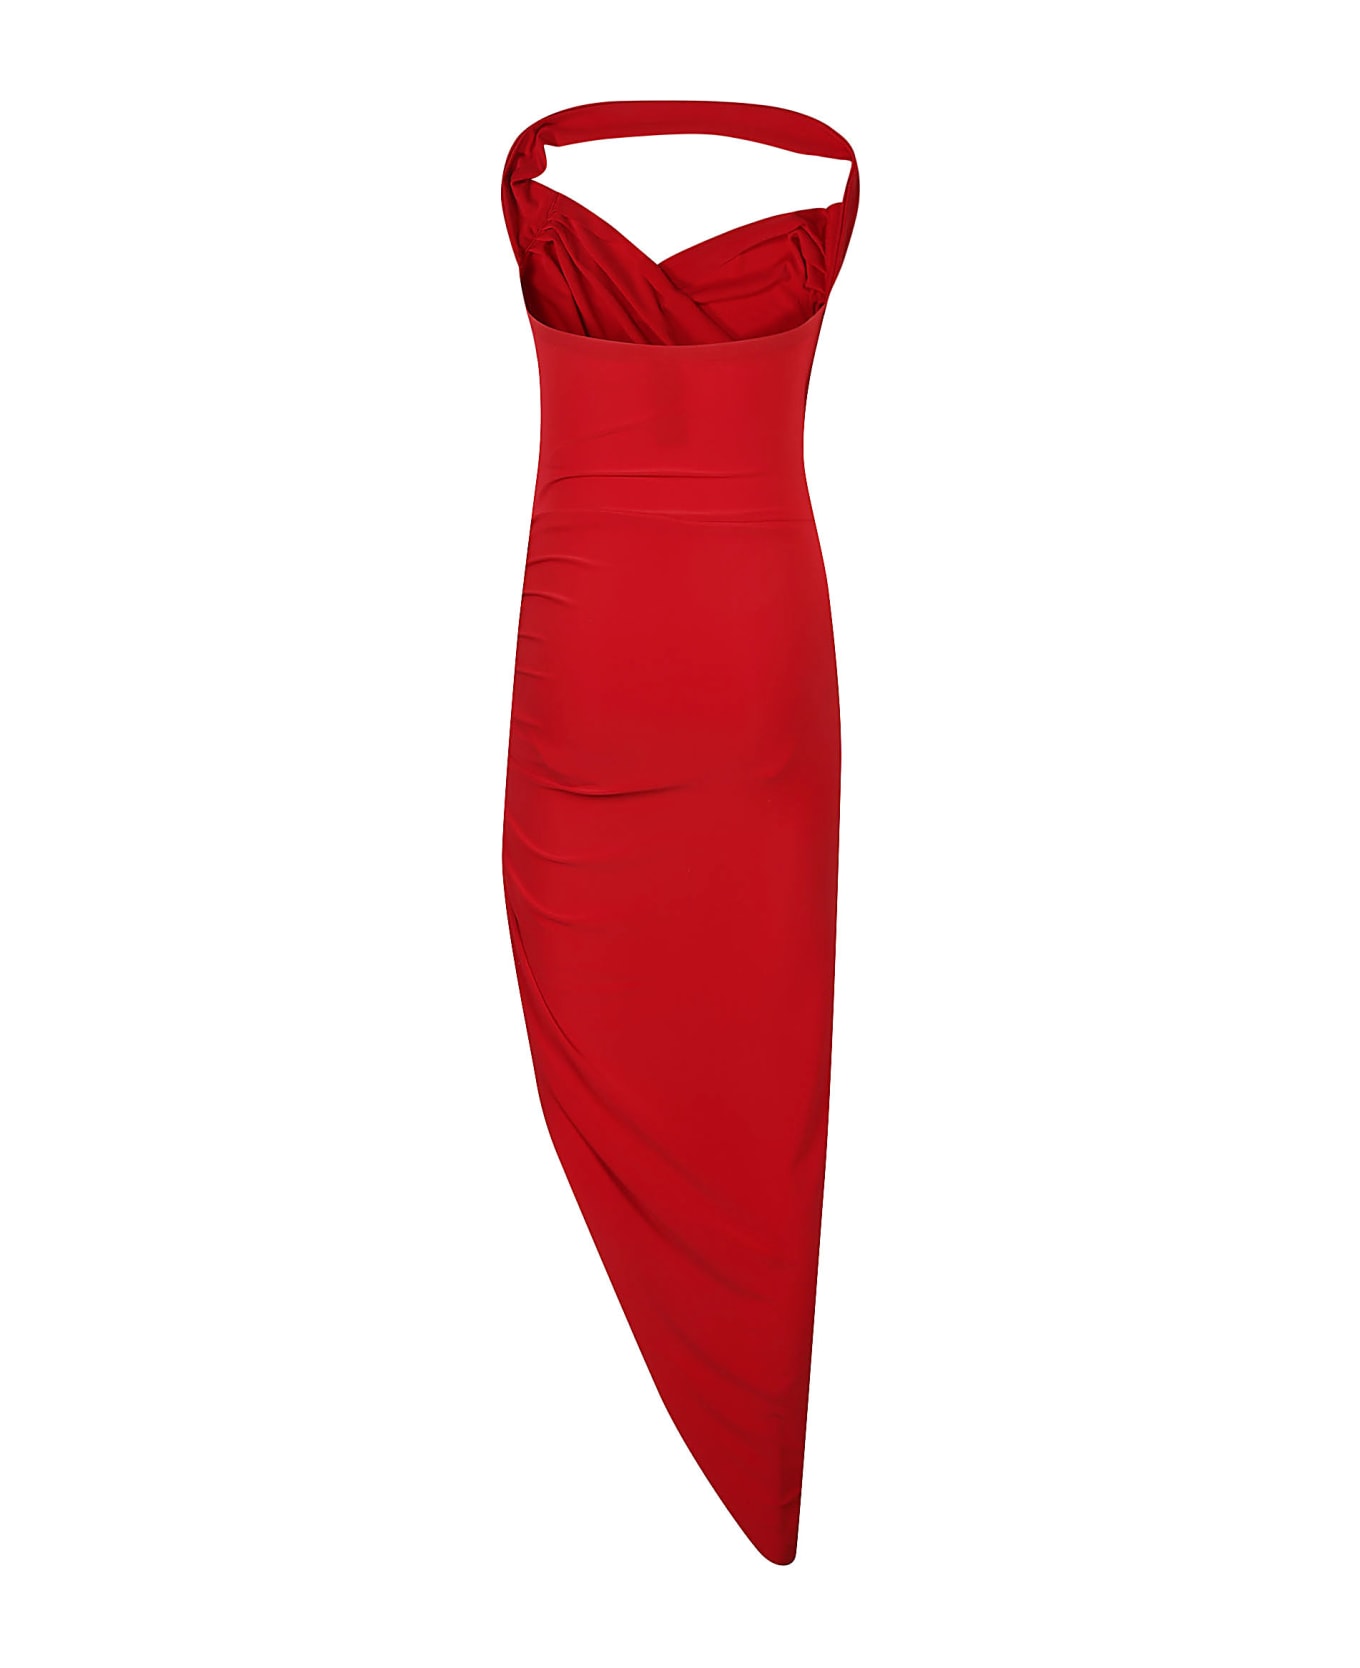 Norma Kamali Cayla Side Drape Dress - Tiger Red